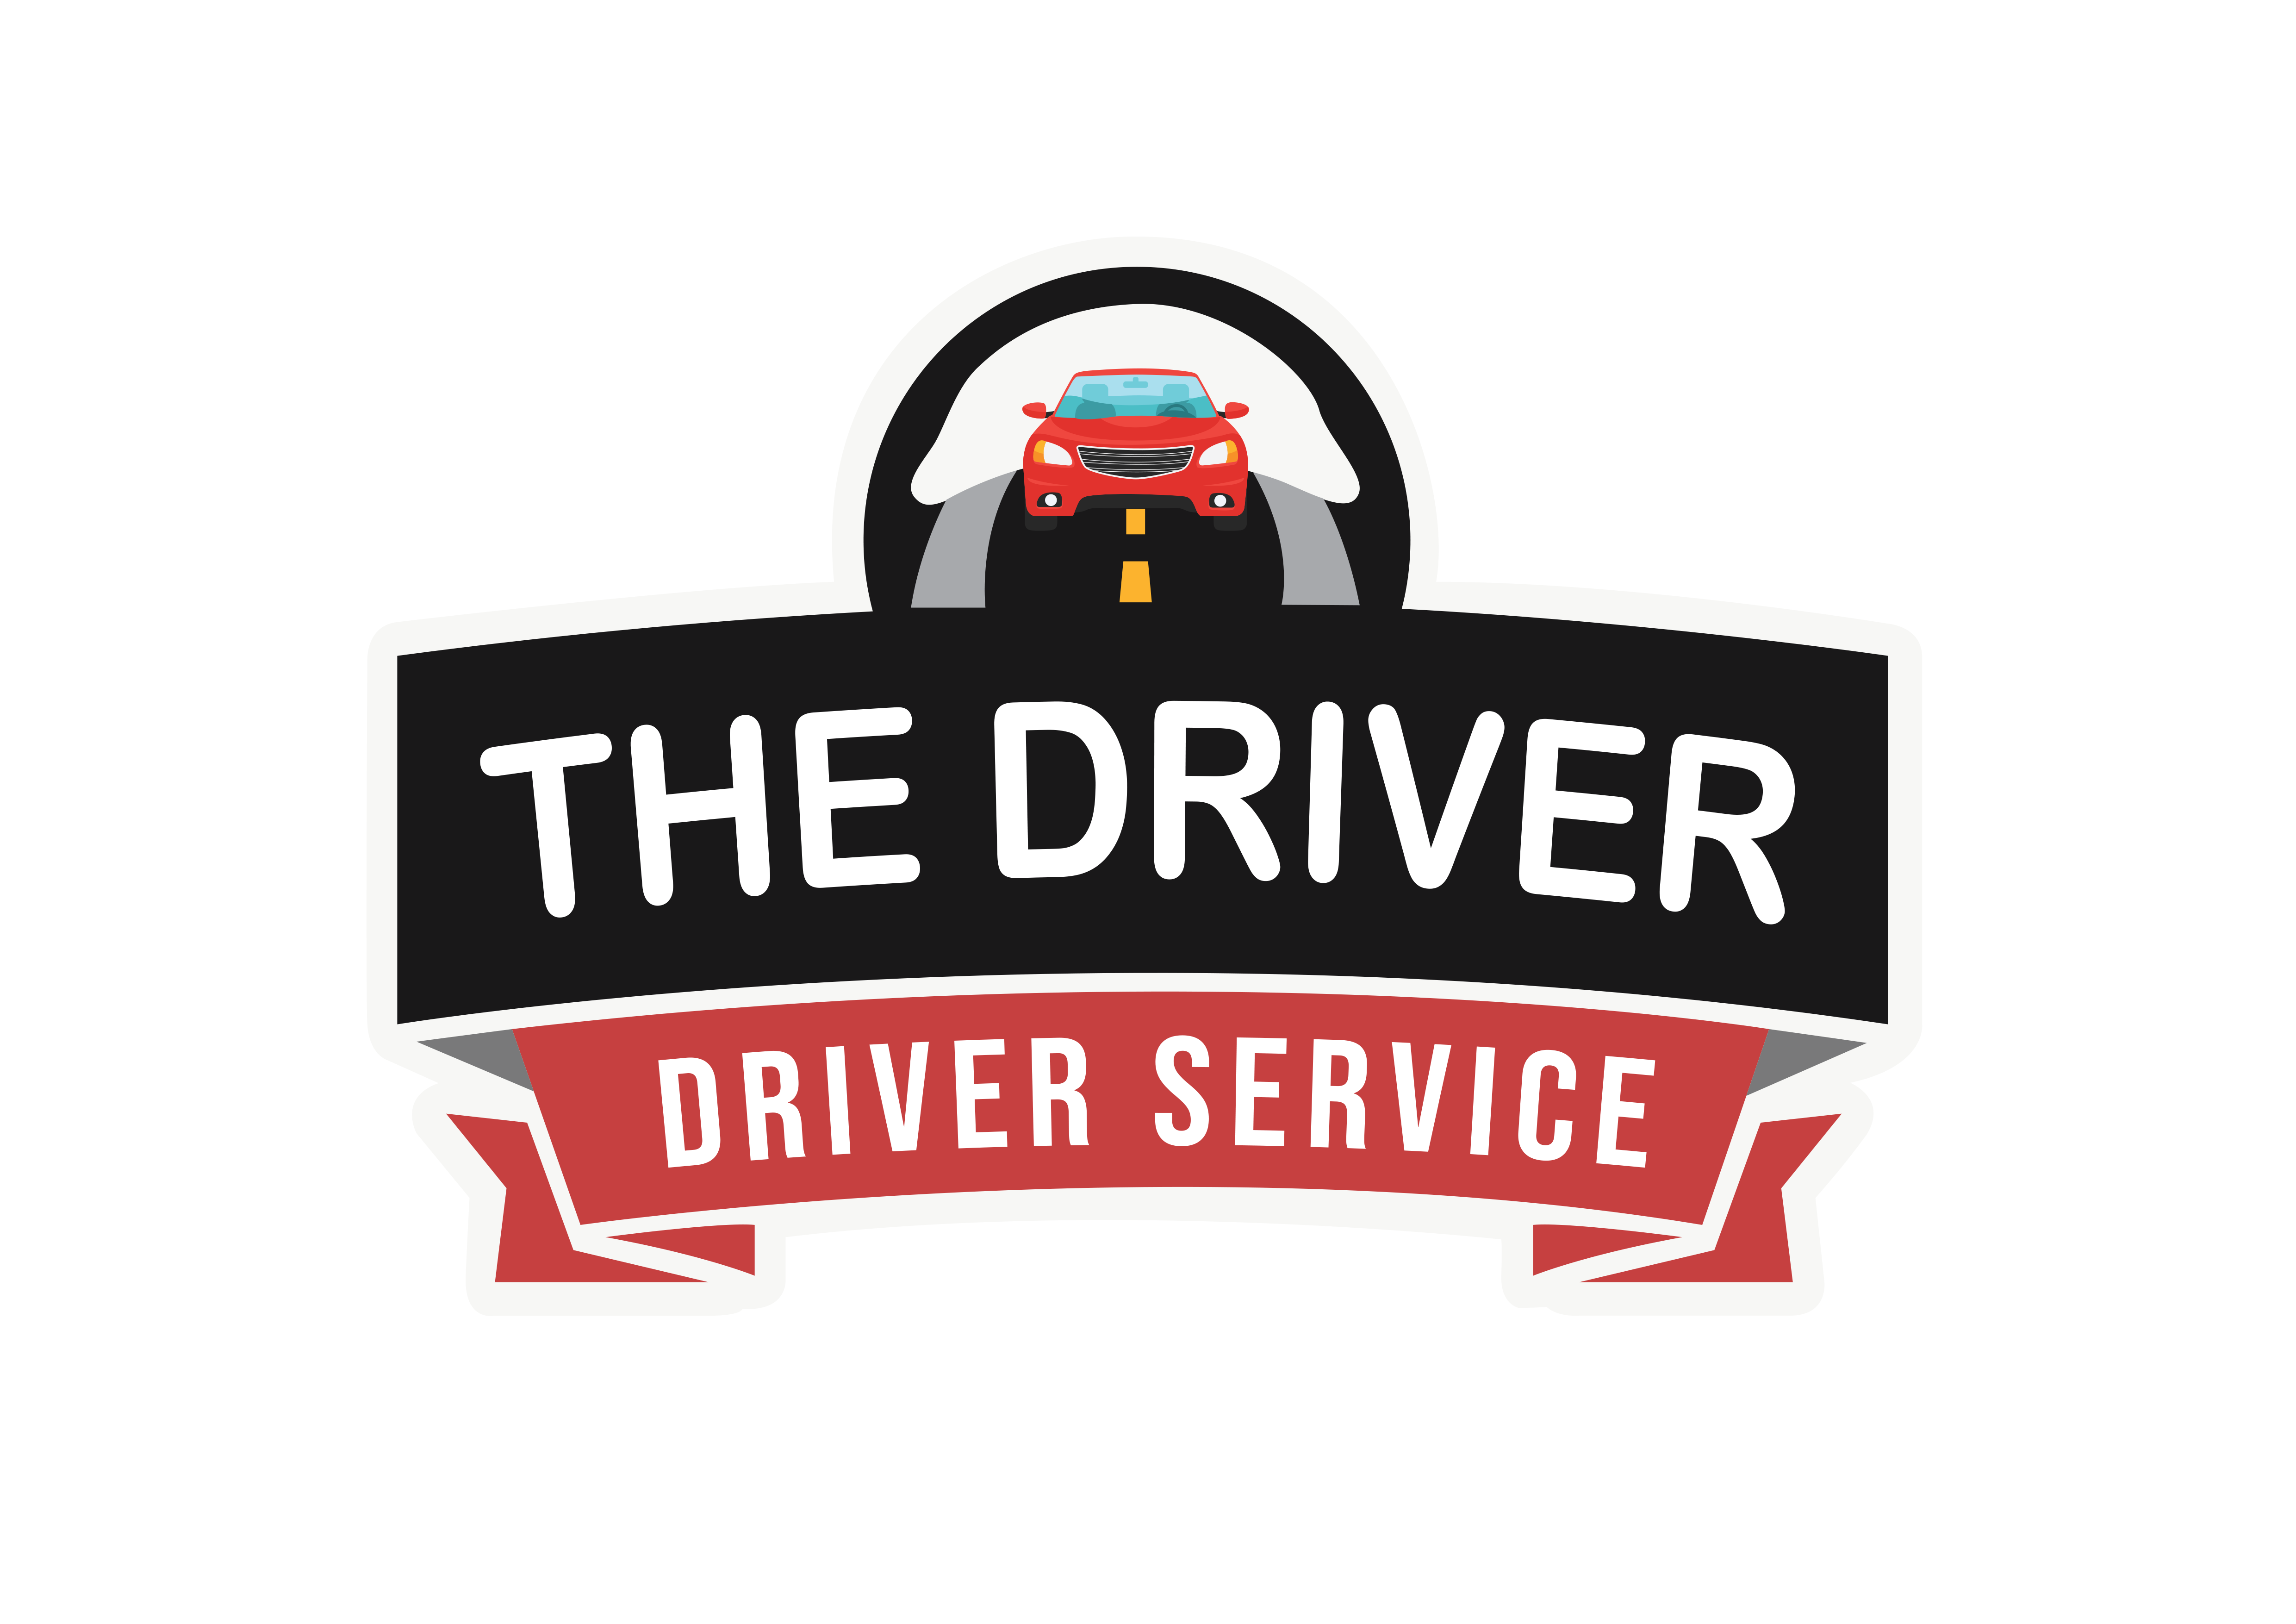 the driver service เว็บไซต์ให้บริการ ด้านปนะกันภัยรถยนต์ พรบ. และ การโอนย้าย